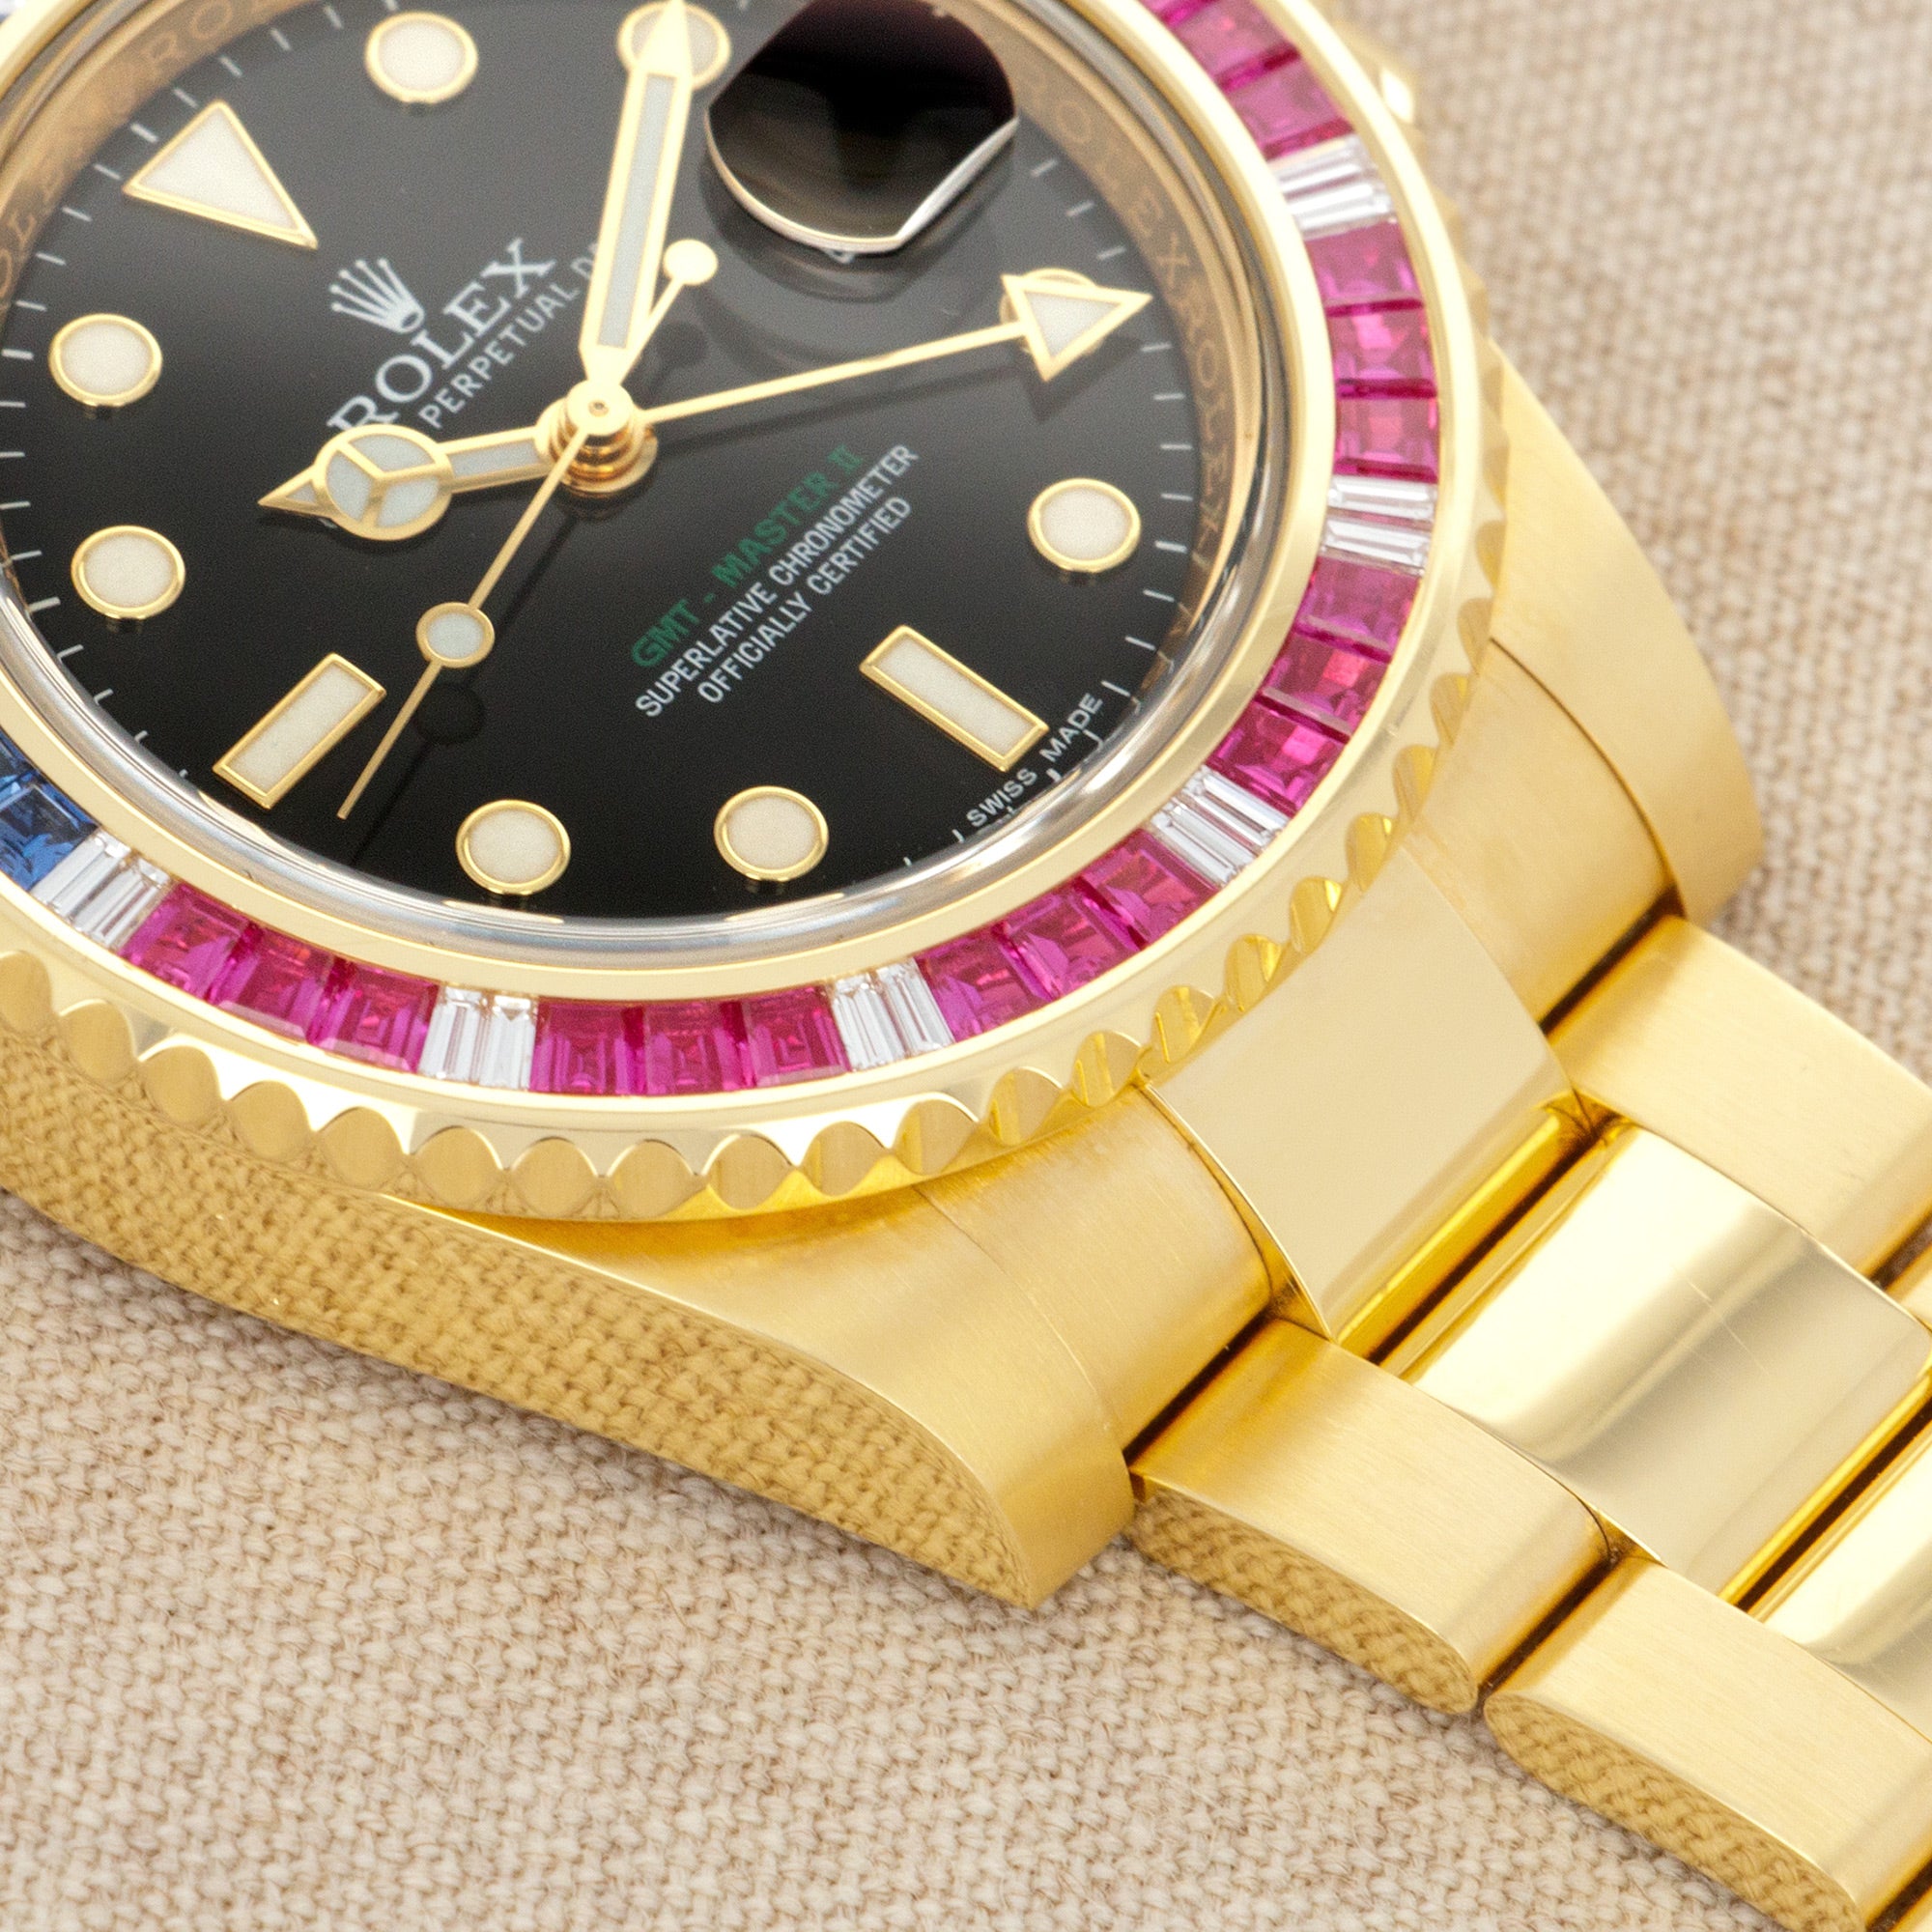 Rolex - Rolex Yellow Gold GMT-Master SARU Watch Ref. 116748 with Original Box and Warranty - The Keystone Watches